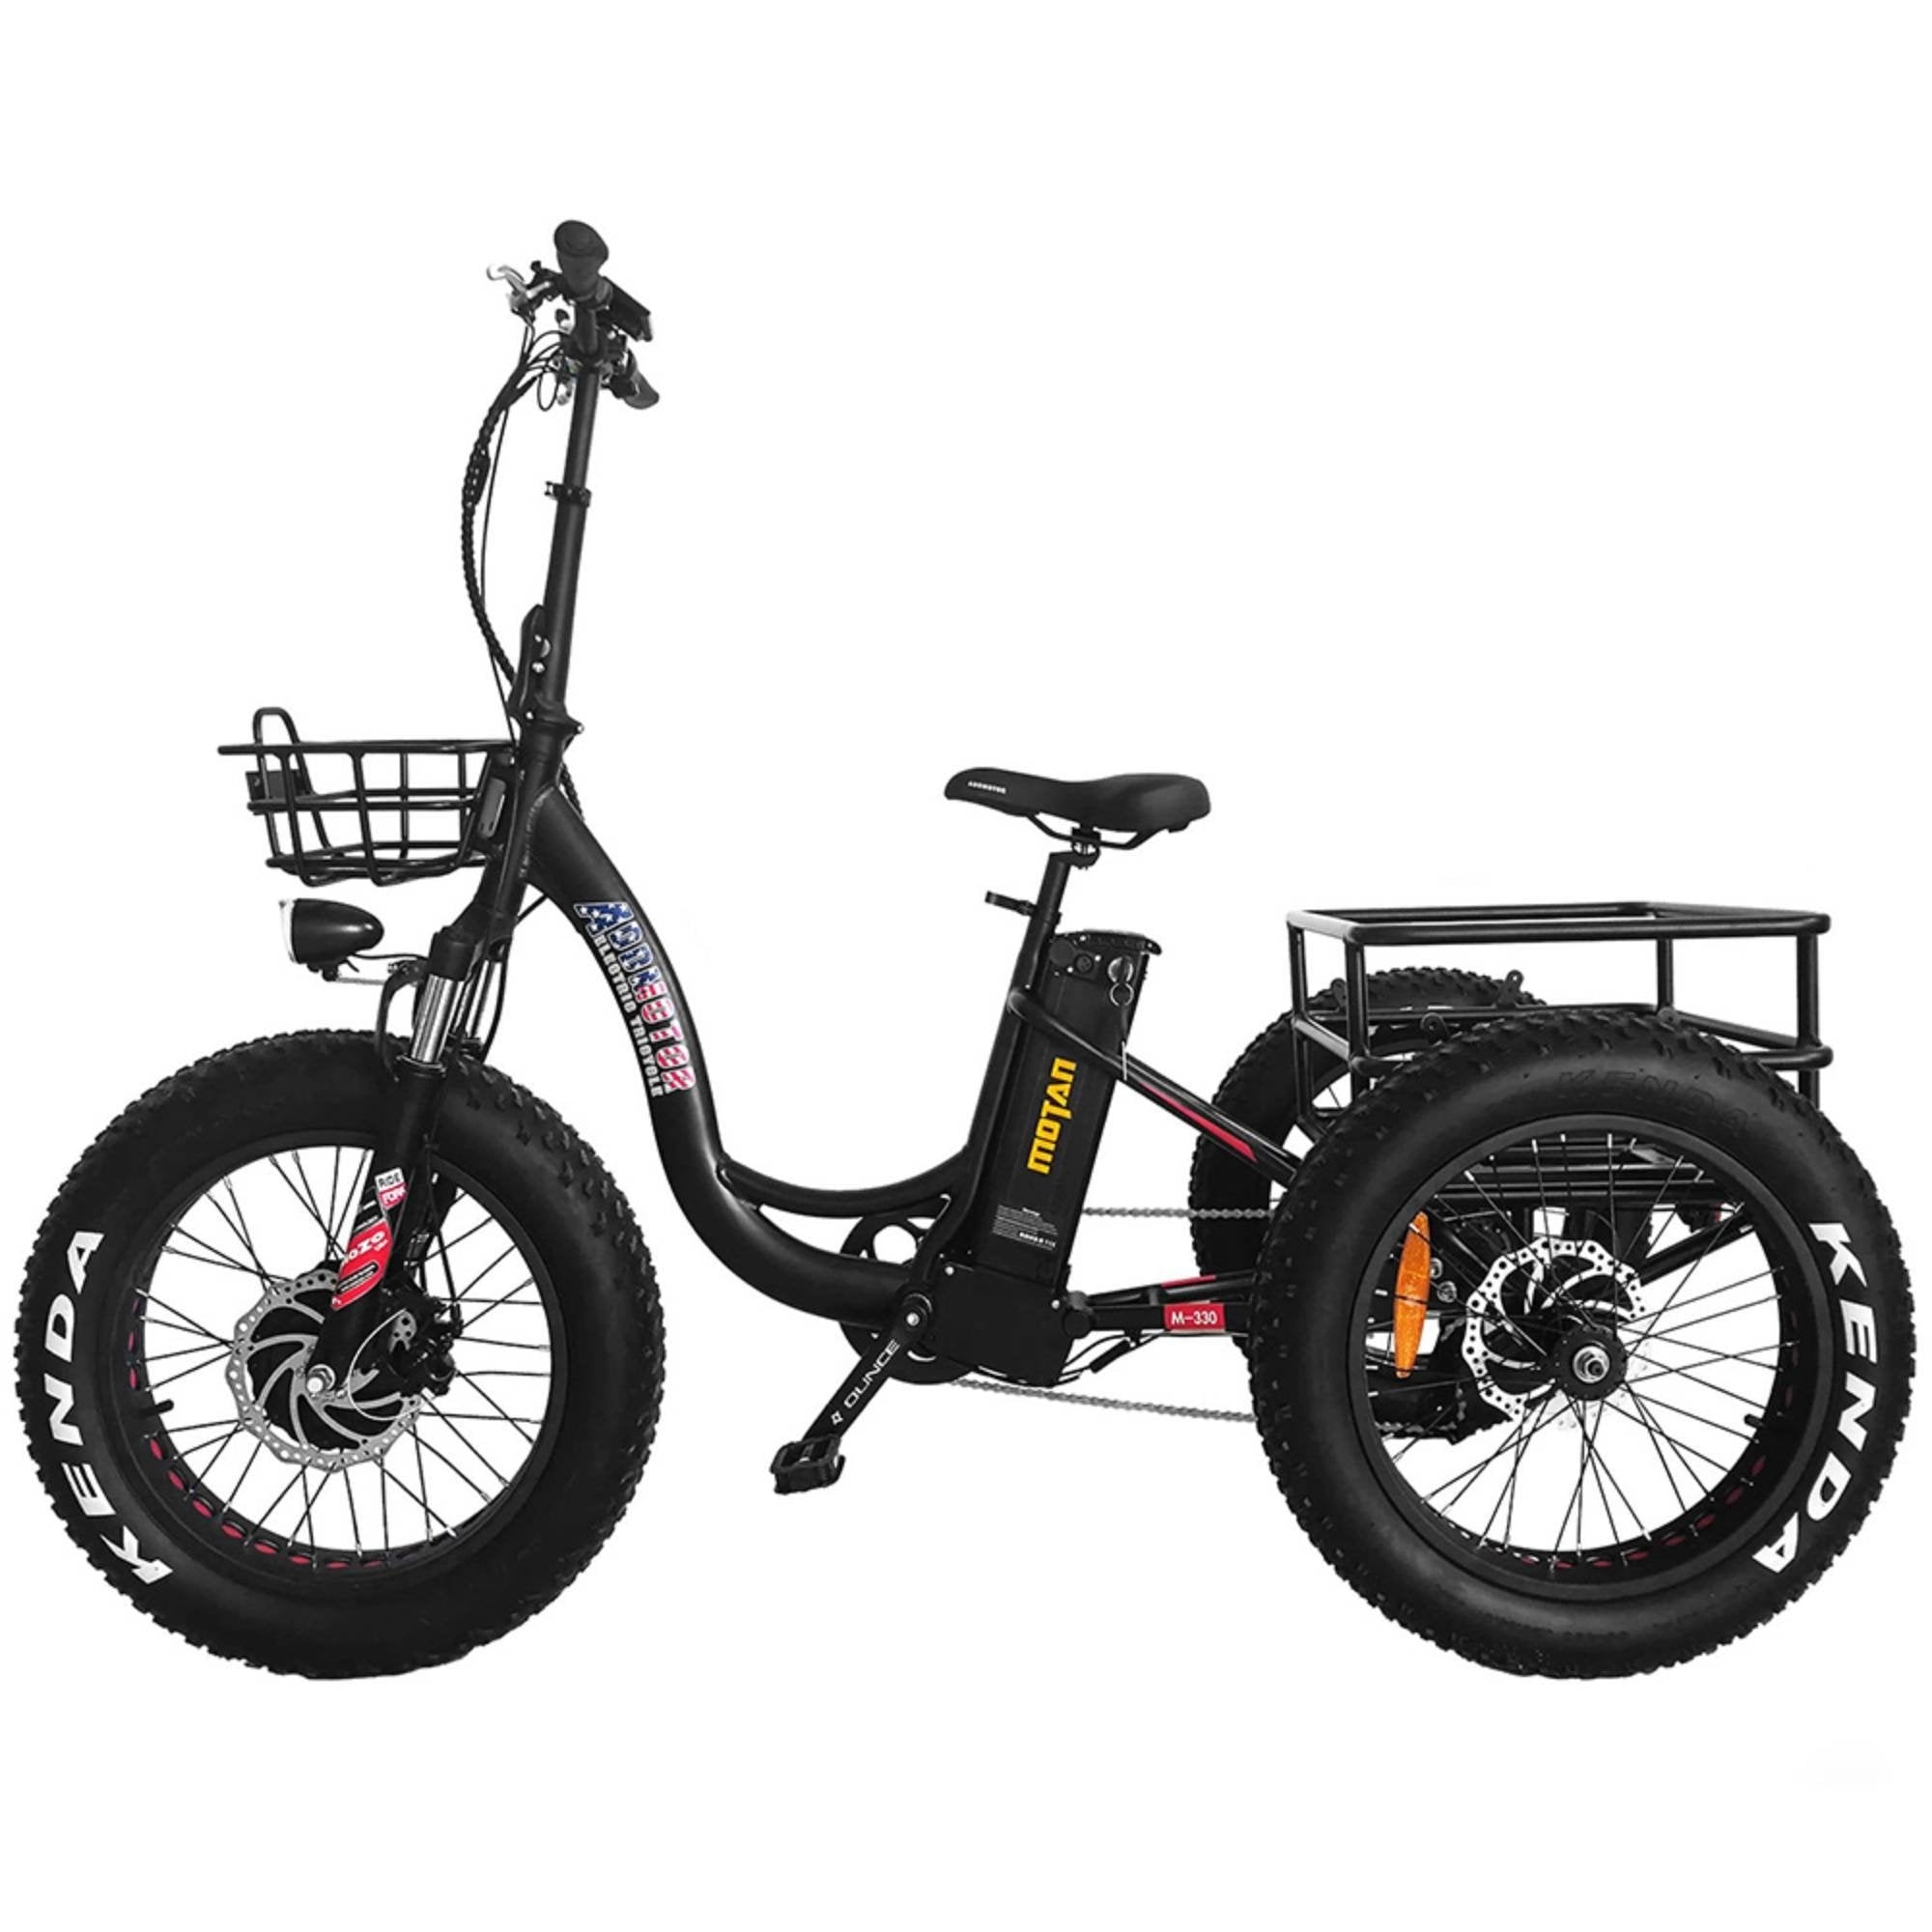 trike | Electric Bicycle Motor